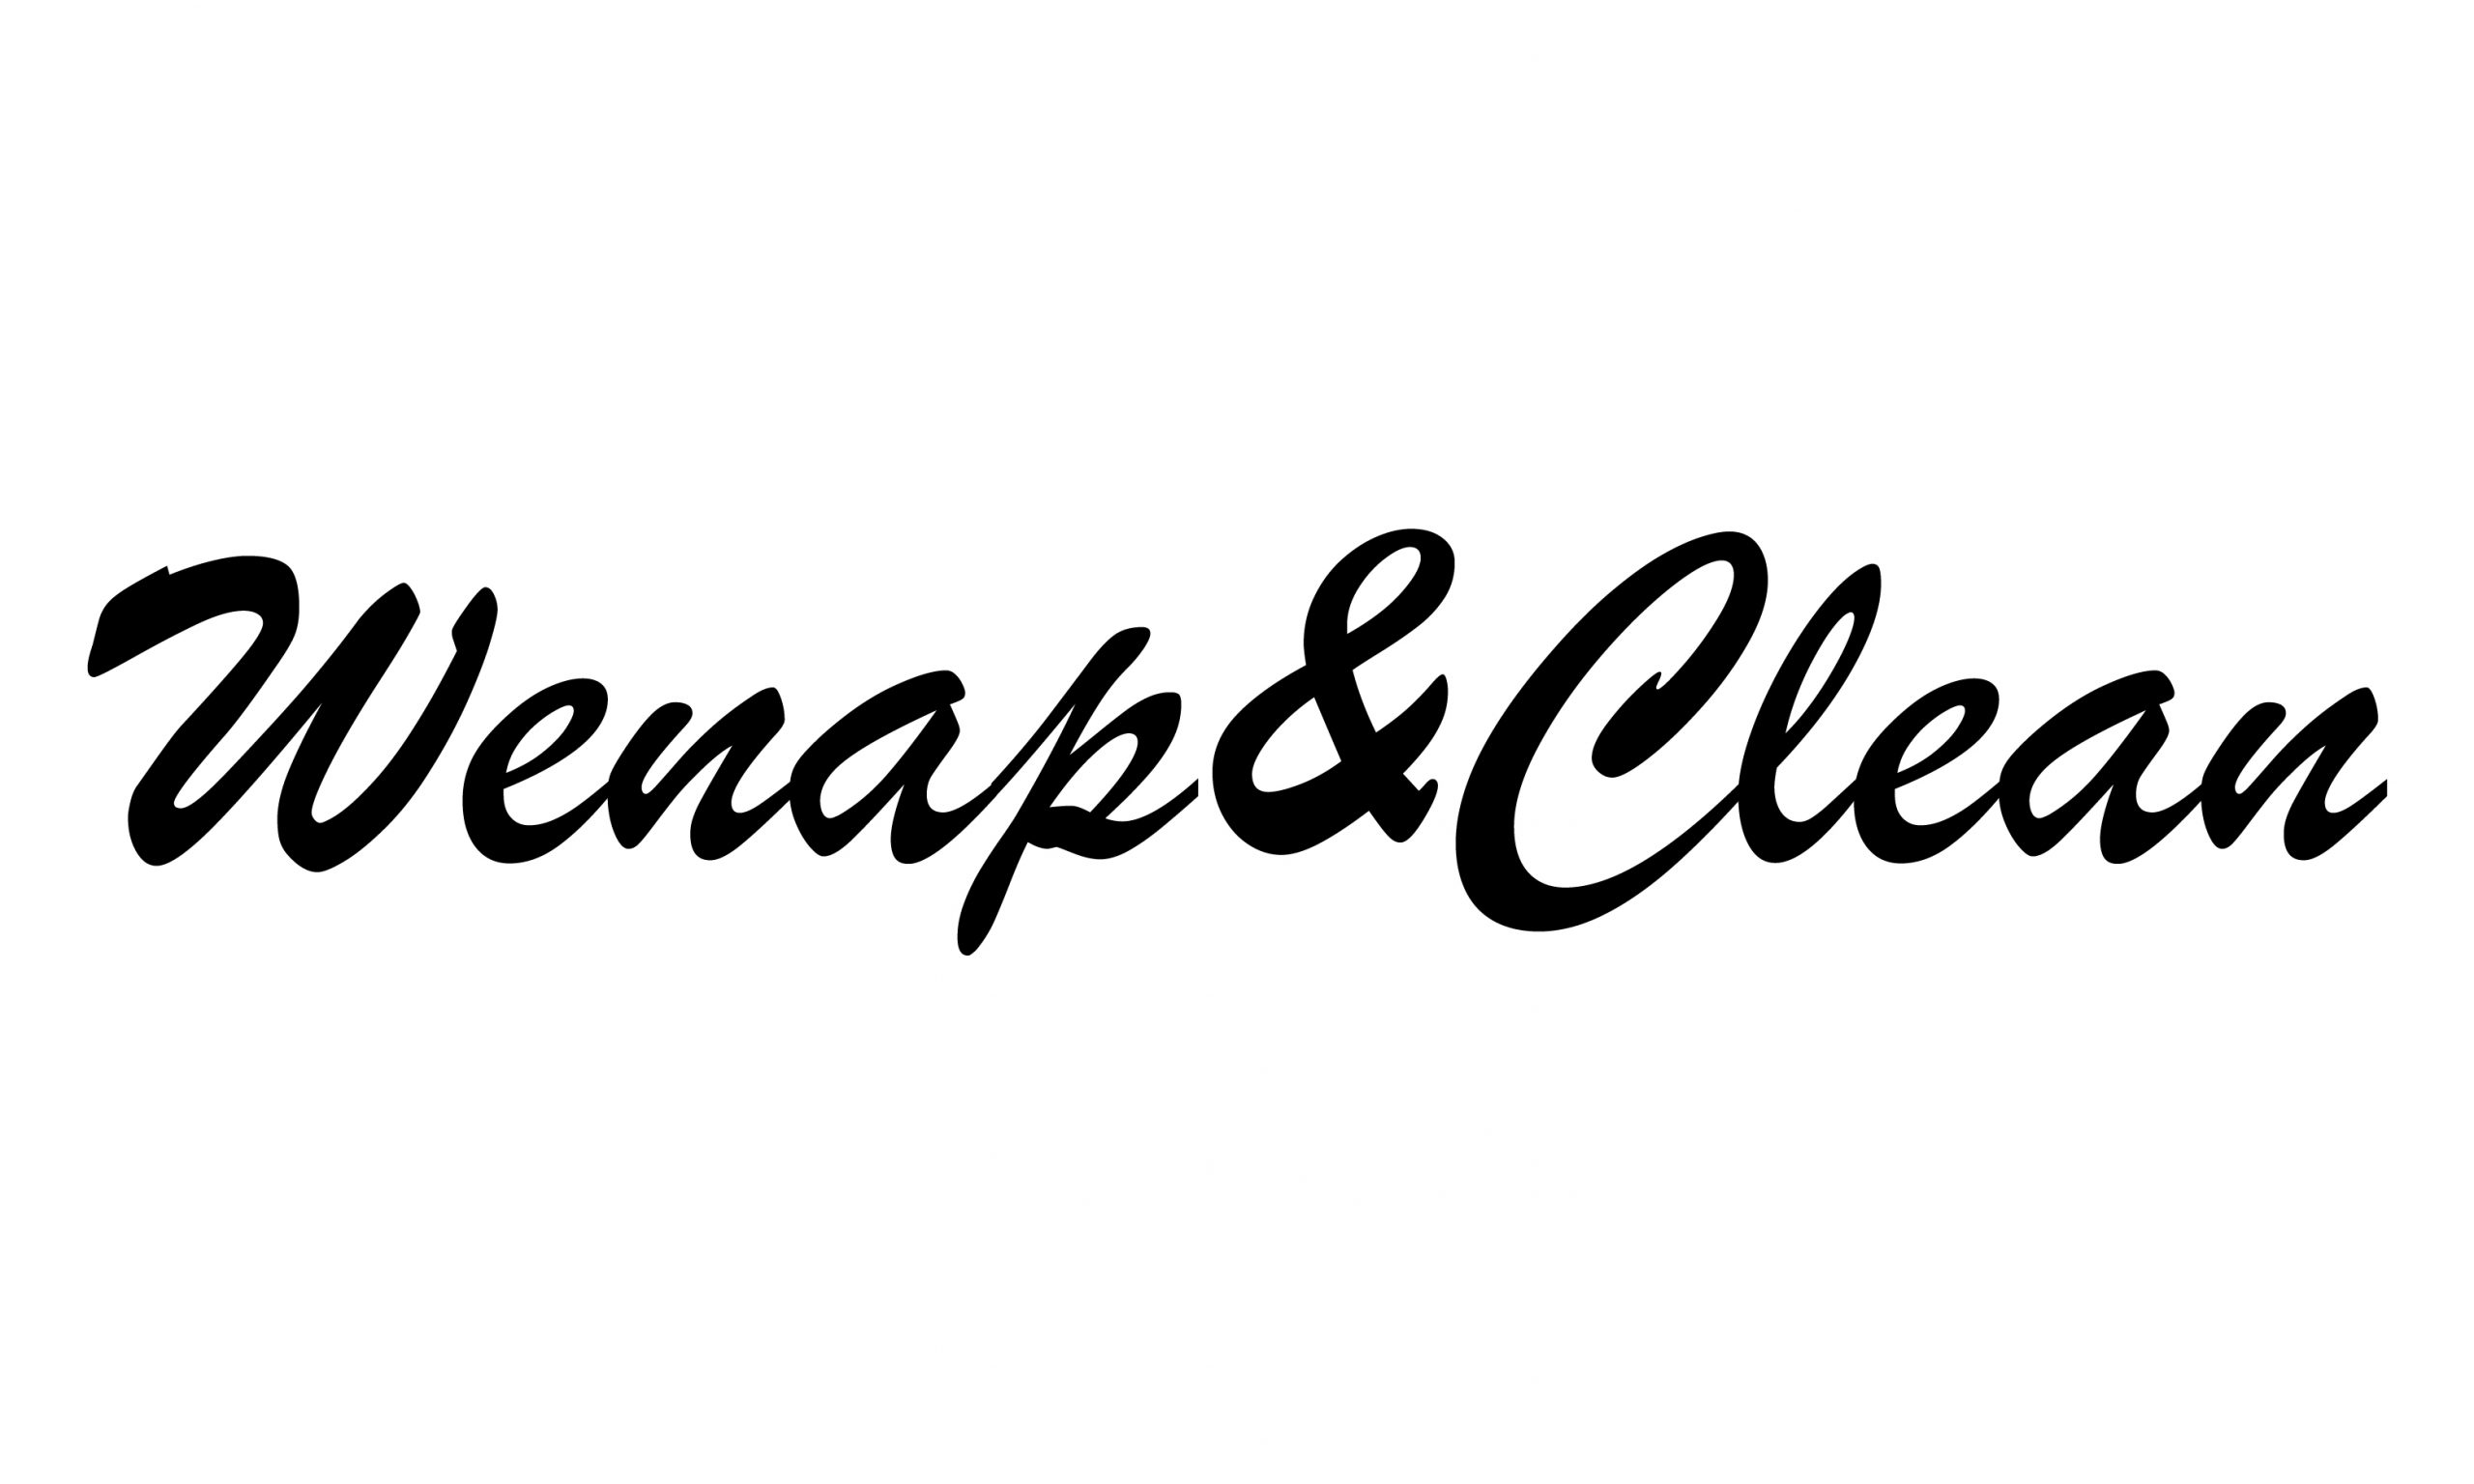 Wenap&Clean